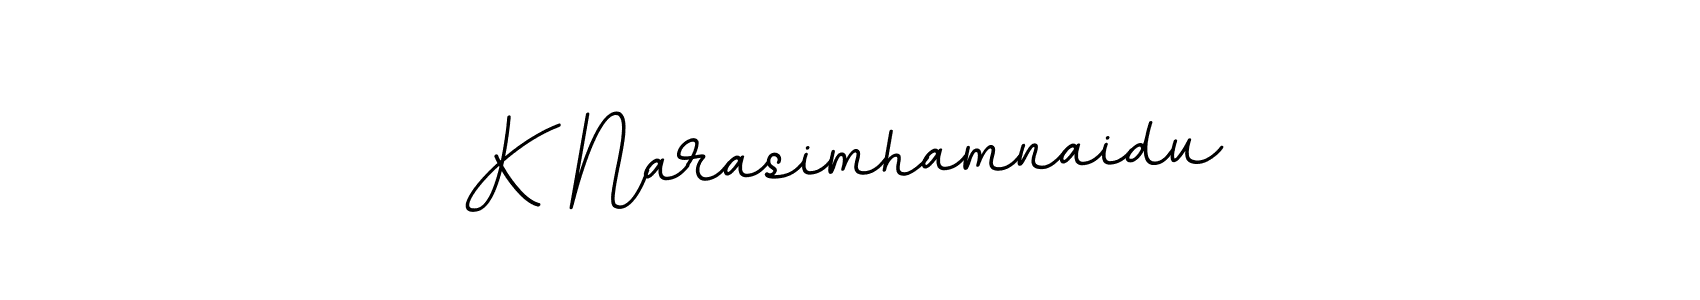 How to Draw K Narasimhamnaidu signature style? BallpointsItalic-DORy9 is a latest design signature styles for name K Narasimhamnaidu. K Narasimhamnaidu signature style 11 images and pictures png